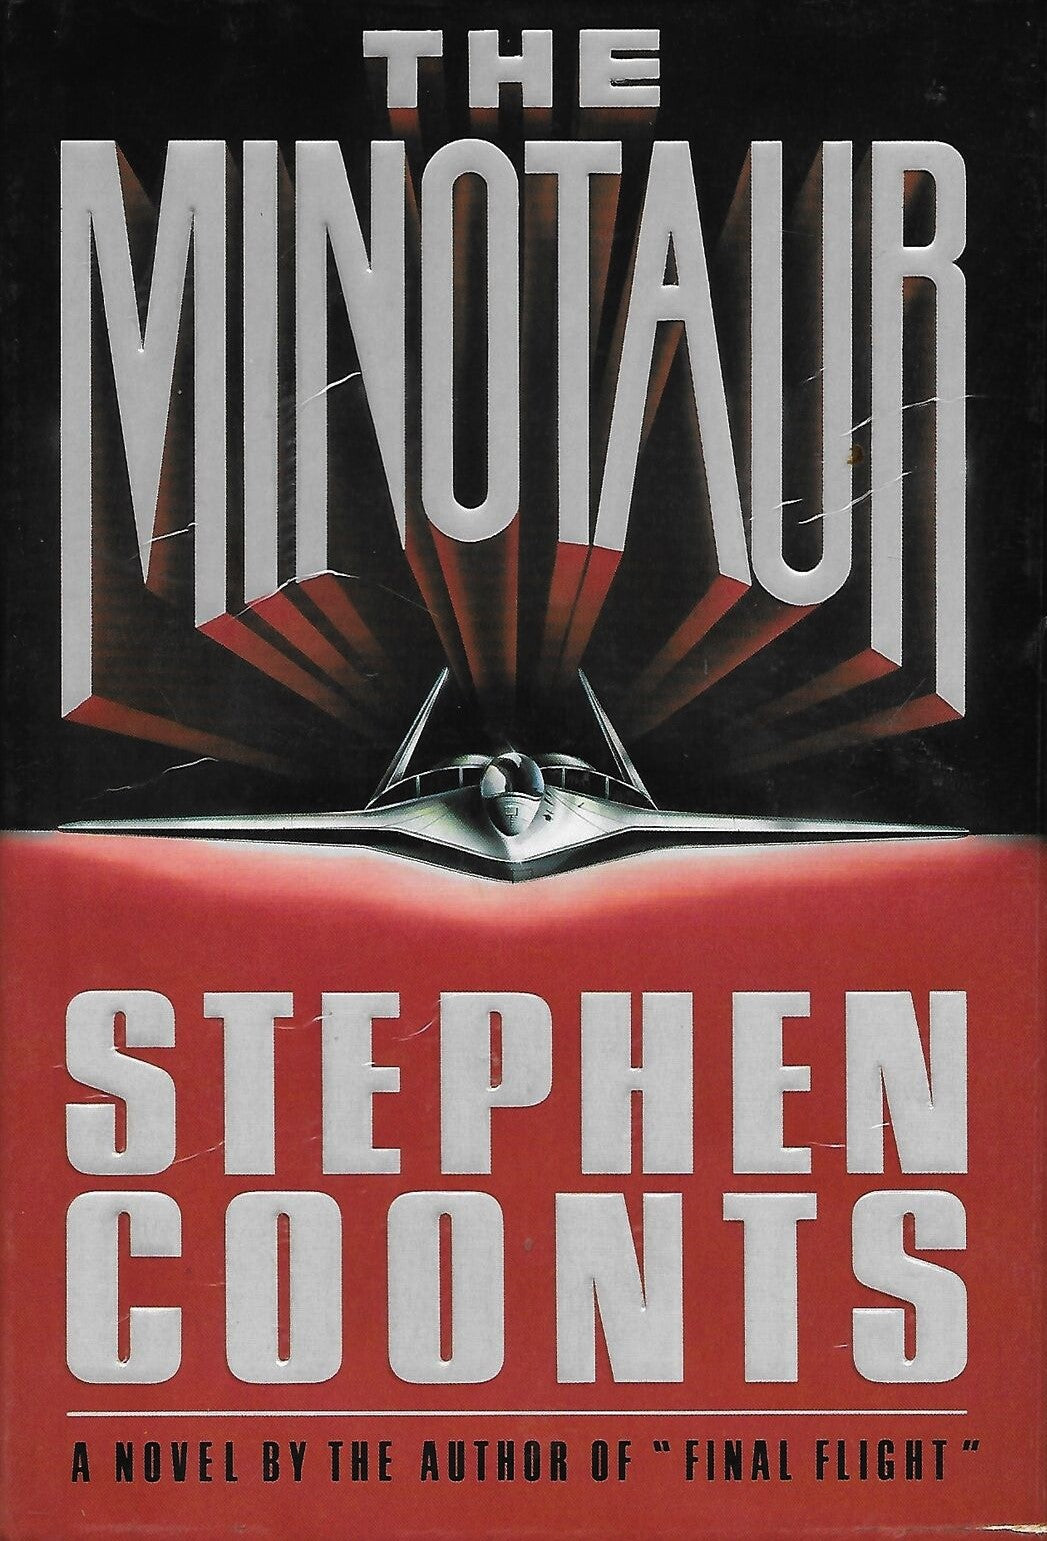 The Minotaur - Stephen Coonts